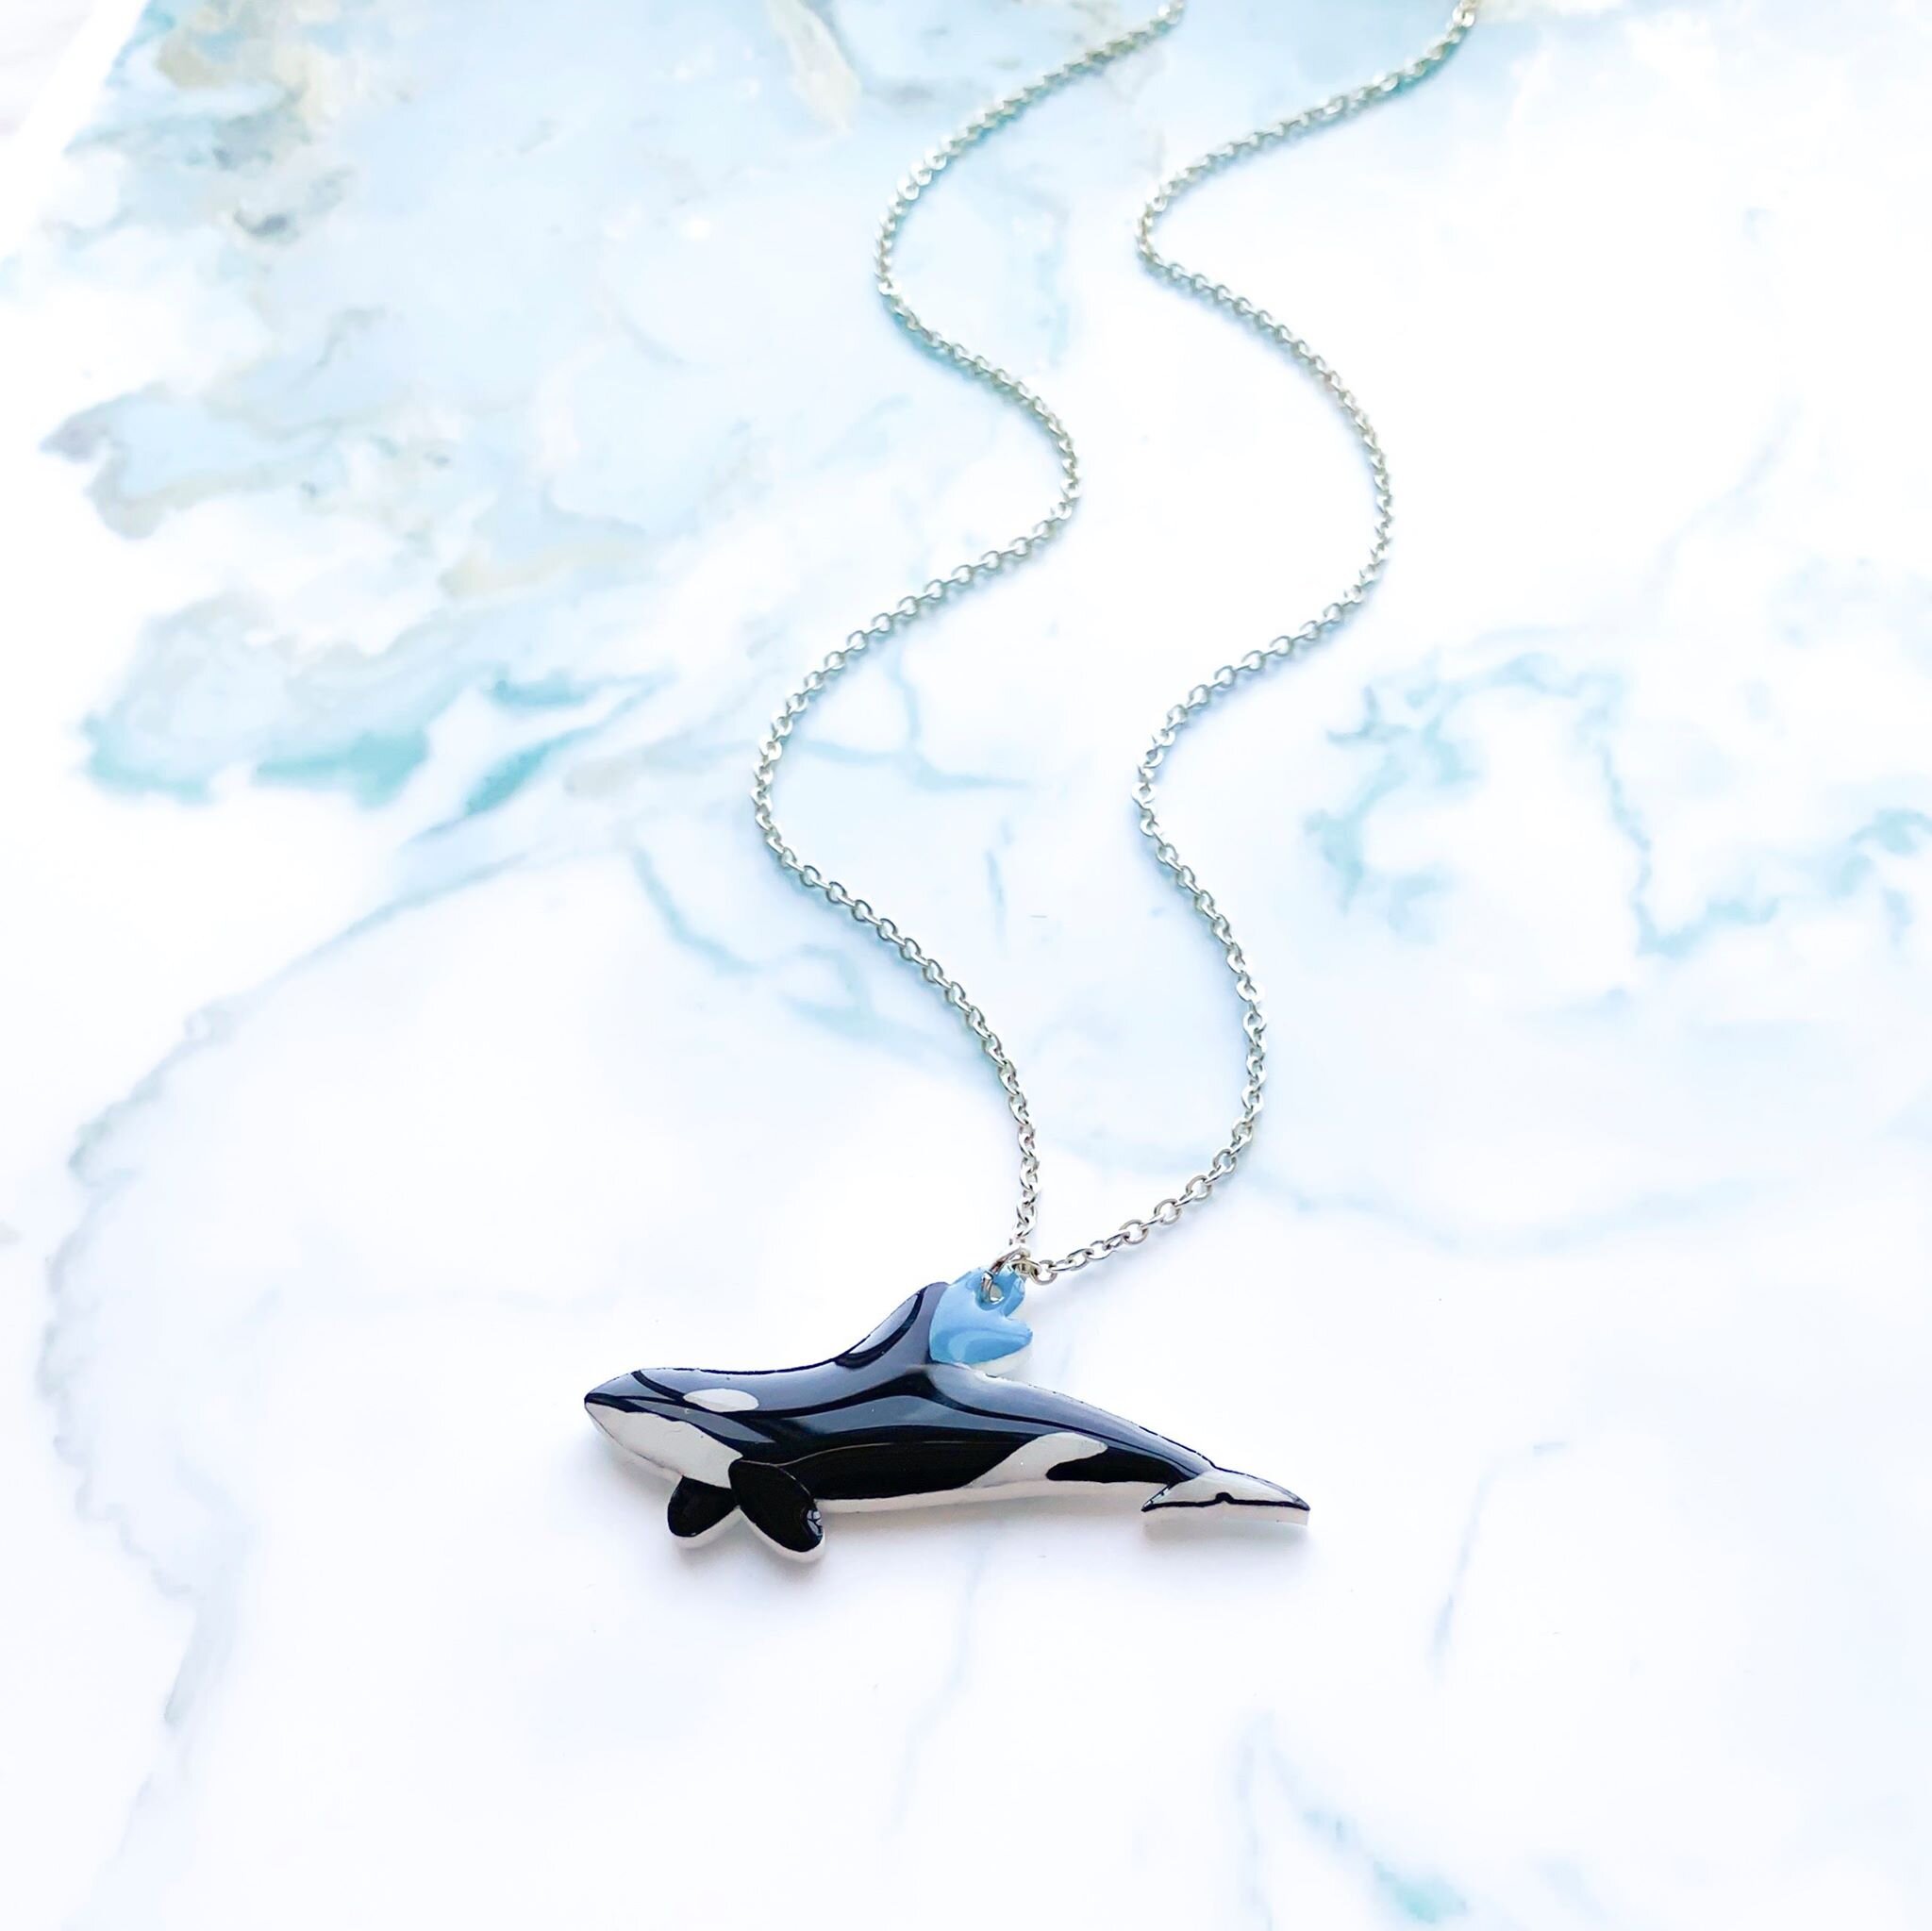 Killer whale necklace - Copy.jpg